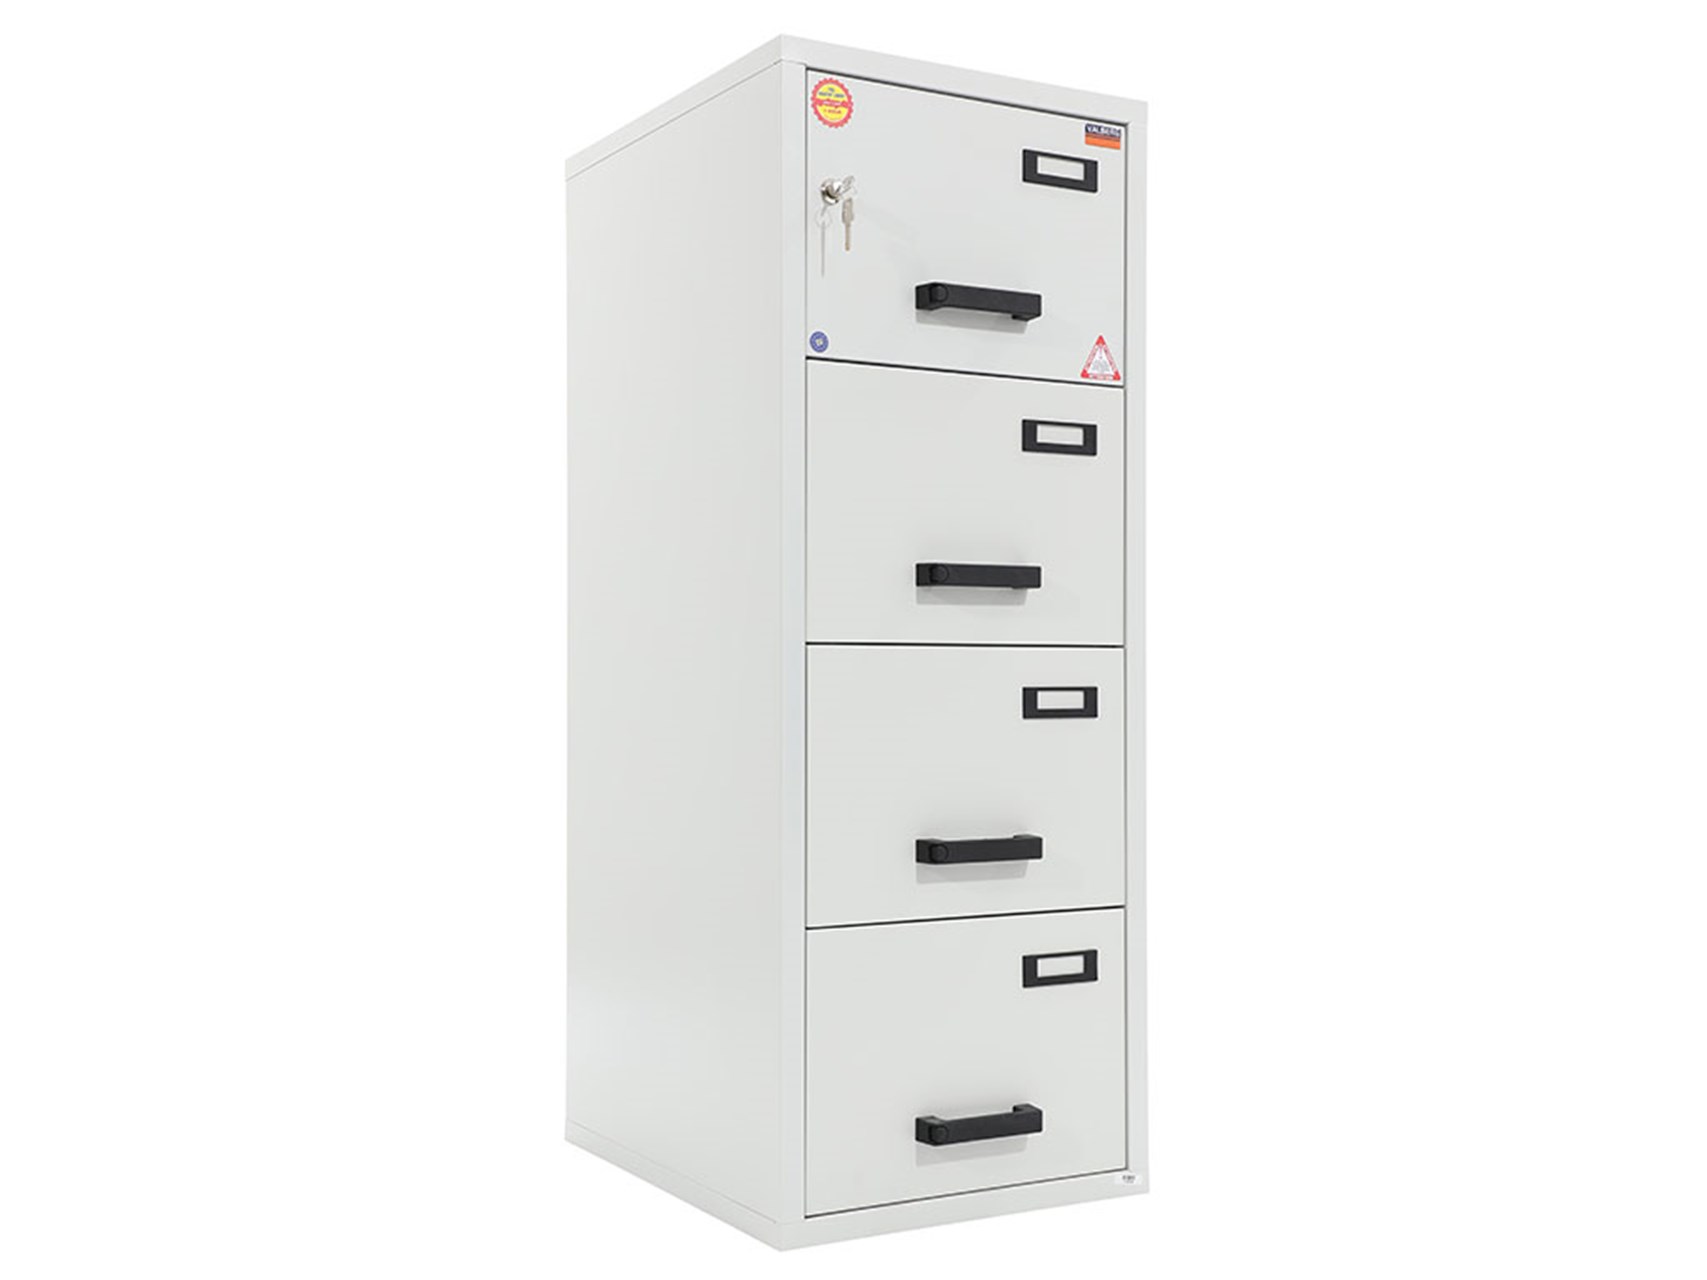 KO-FC4 filing cabinet